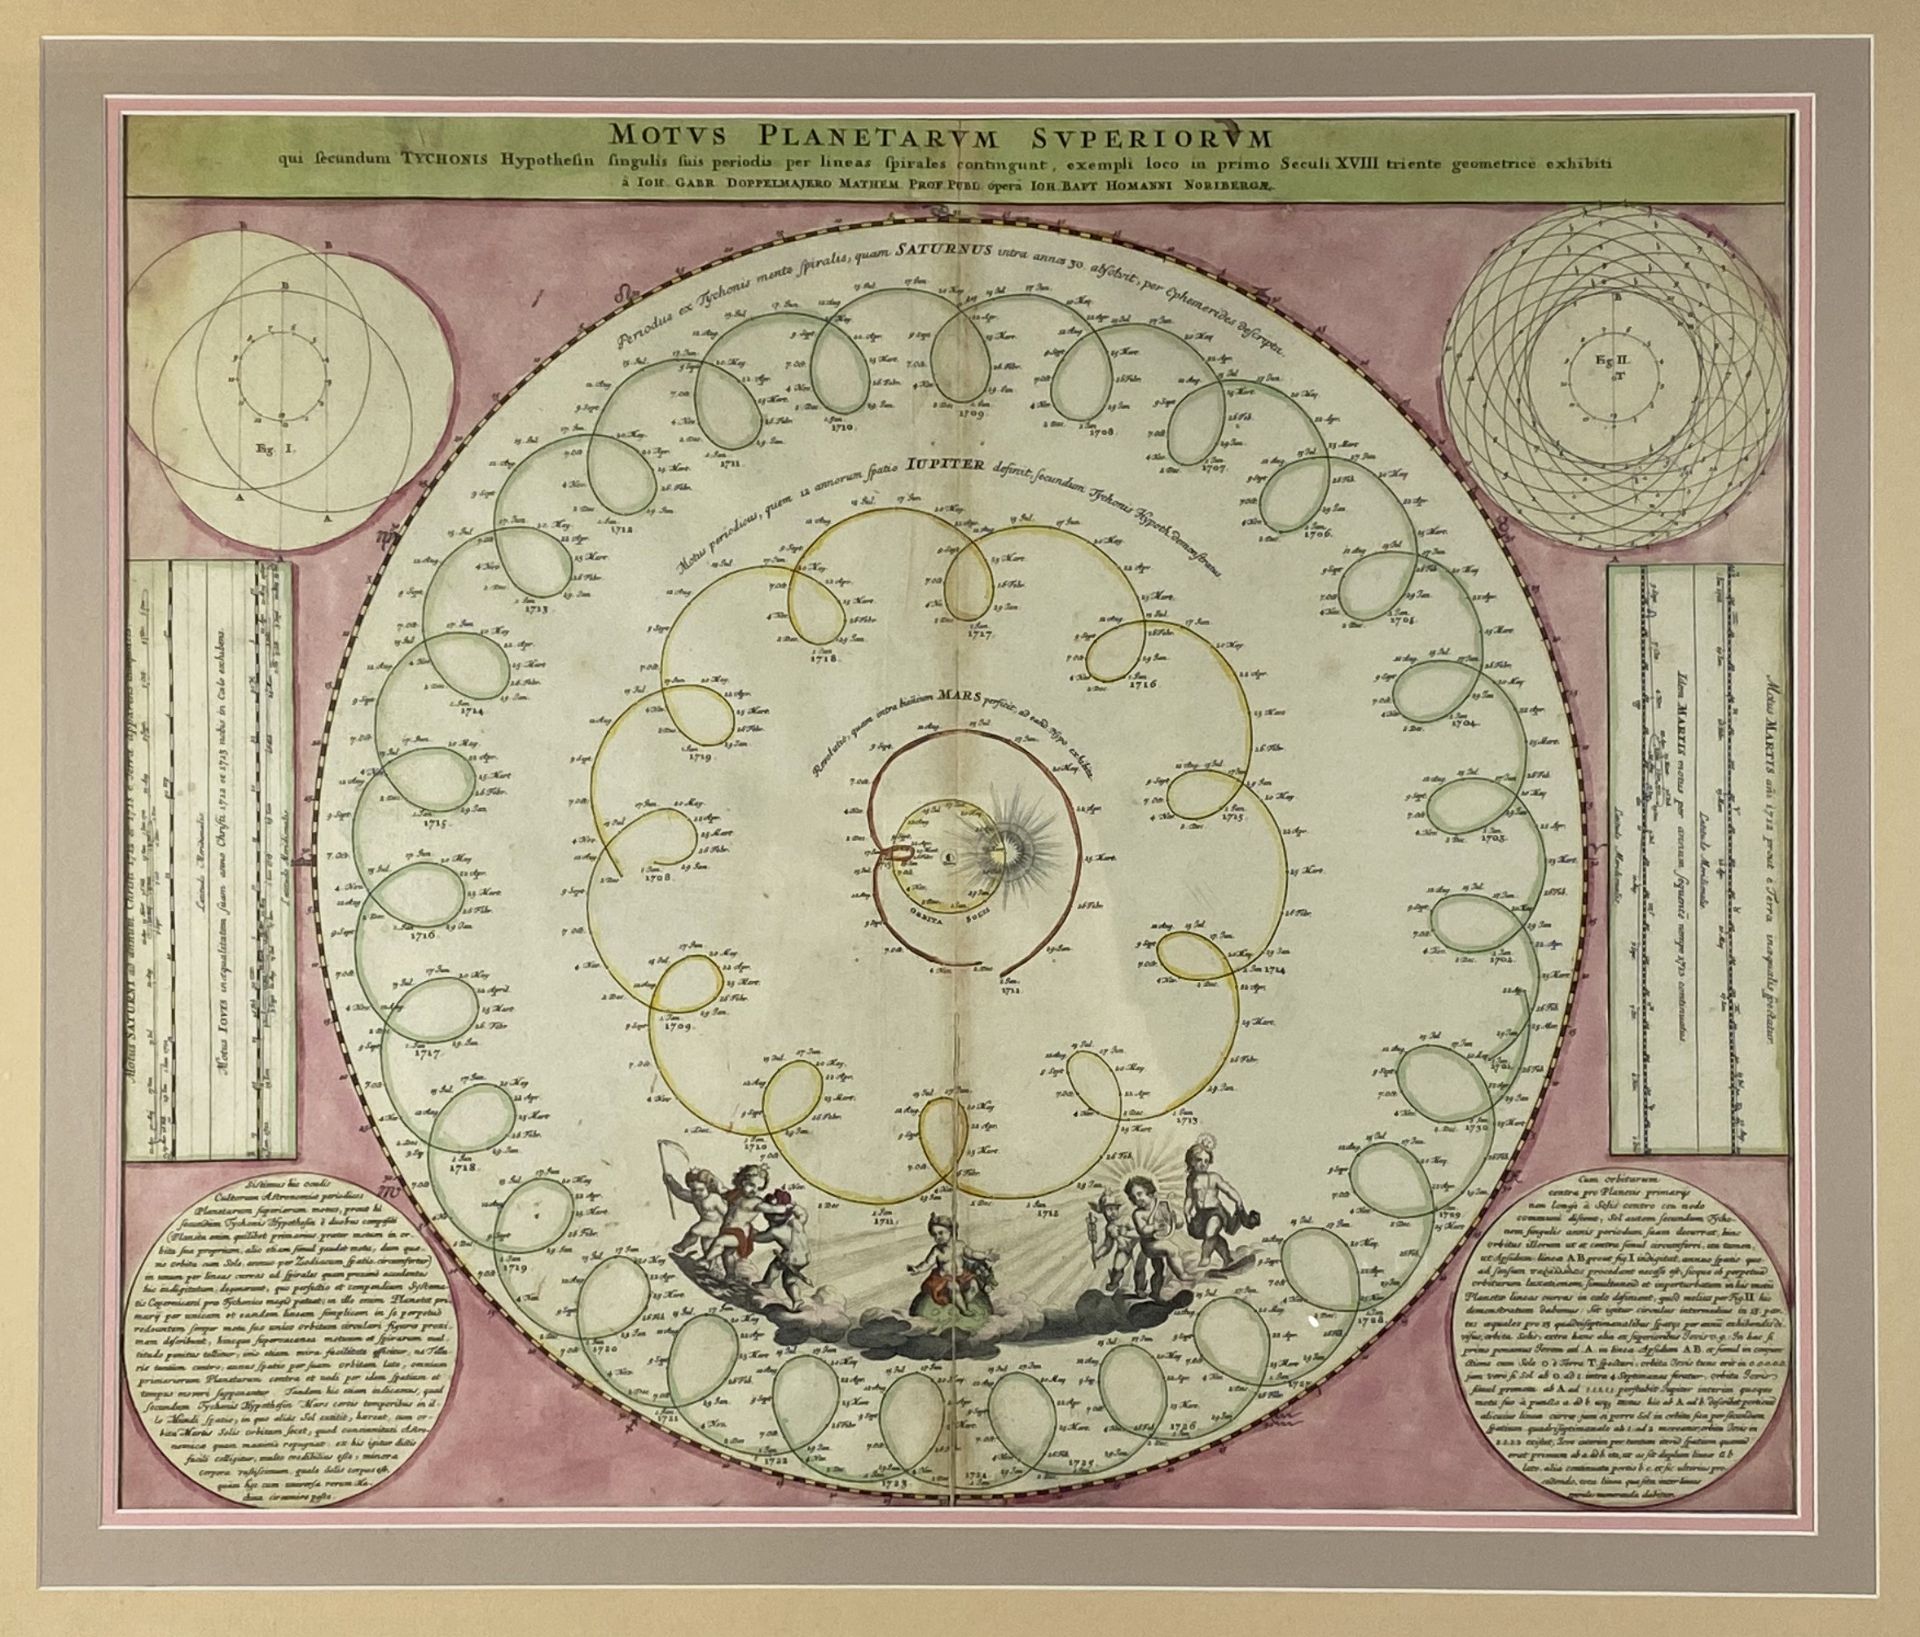 CELESTIAL CHART -- "MOTUS PLANETARUM SUPERIORUM". Nuremburg, J.B. Homann, (c. 1740). Engr. celestial